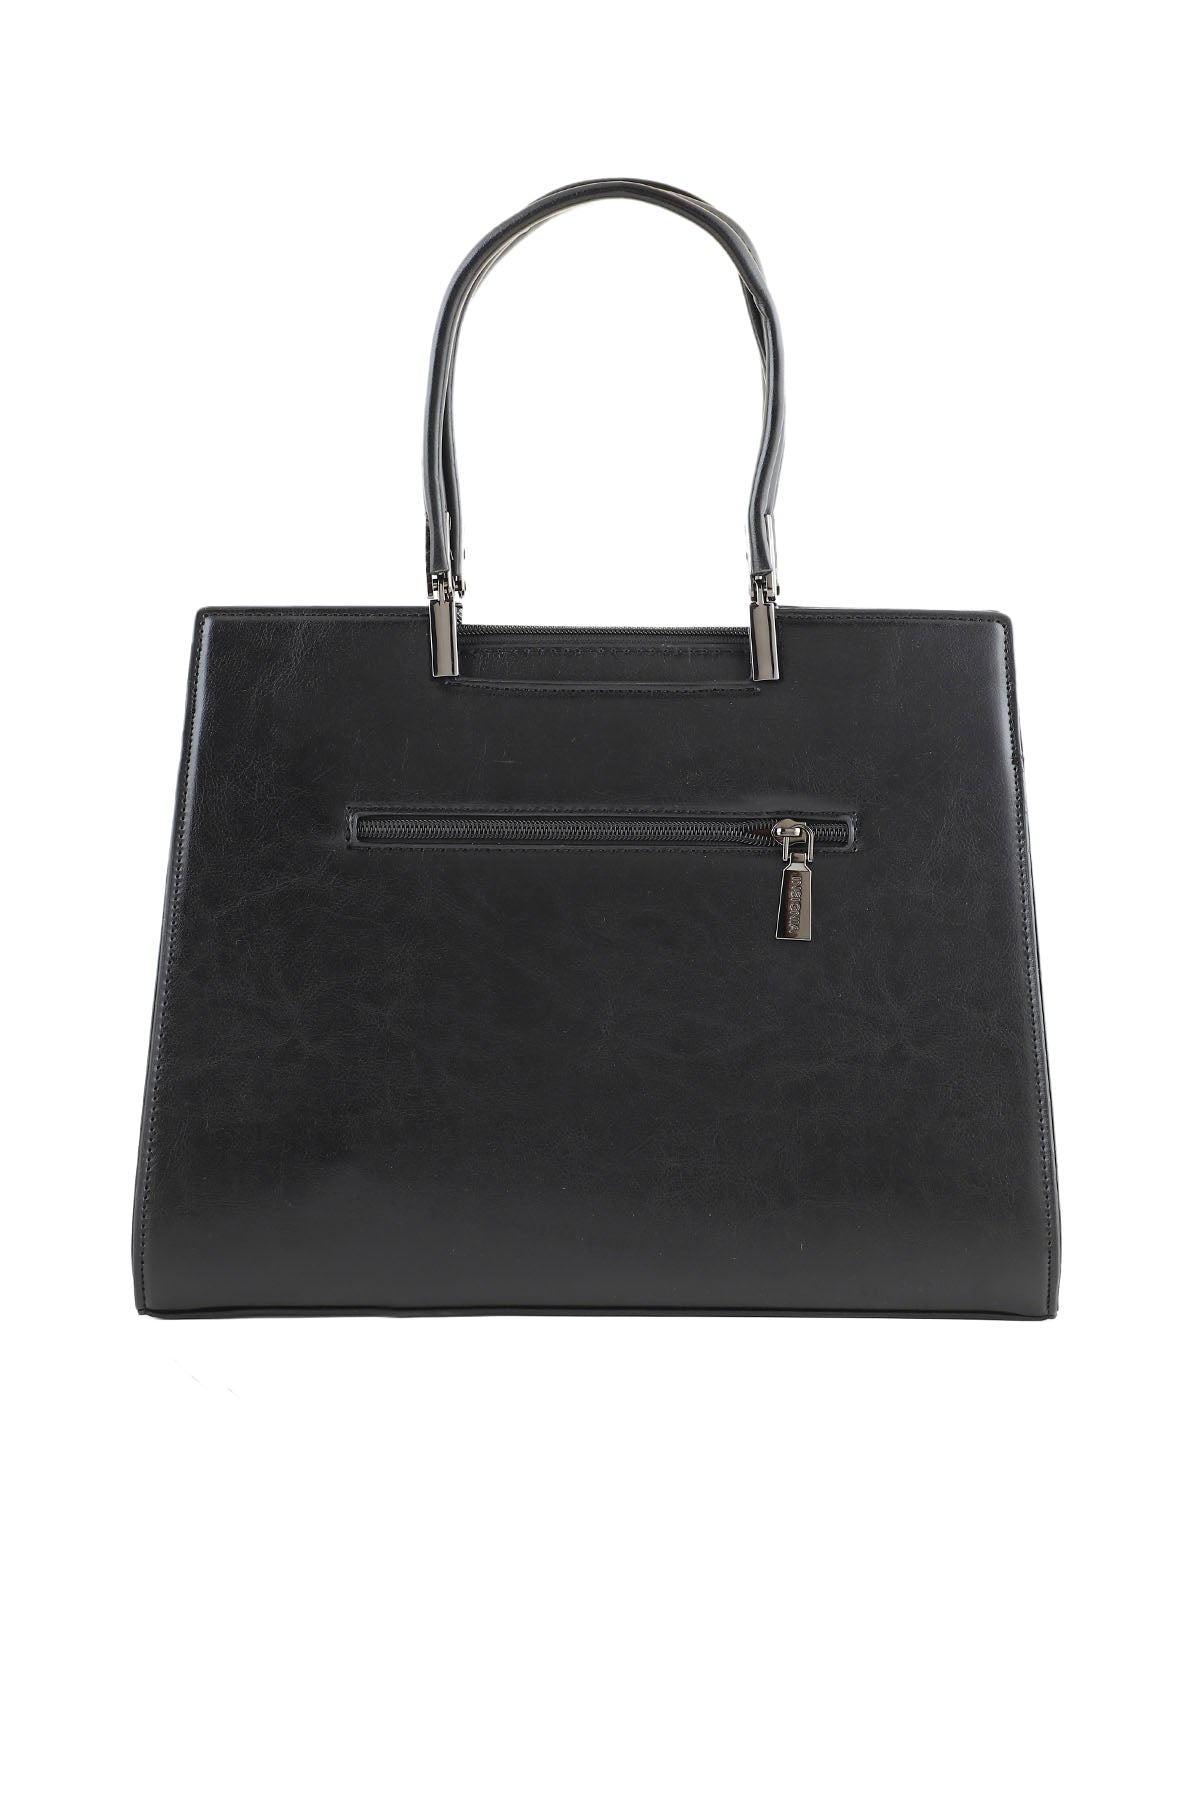 Formal Tote Hand Bags B14967-Black